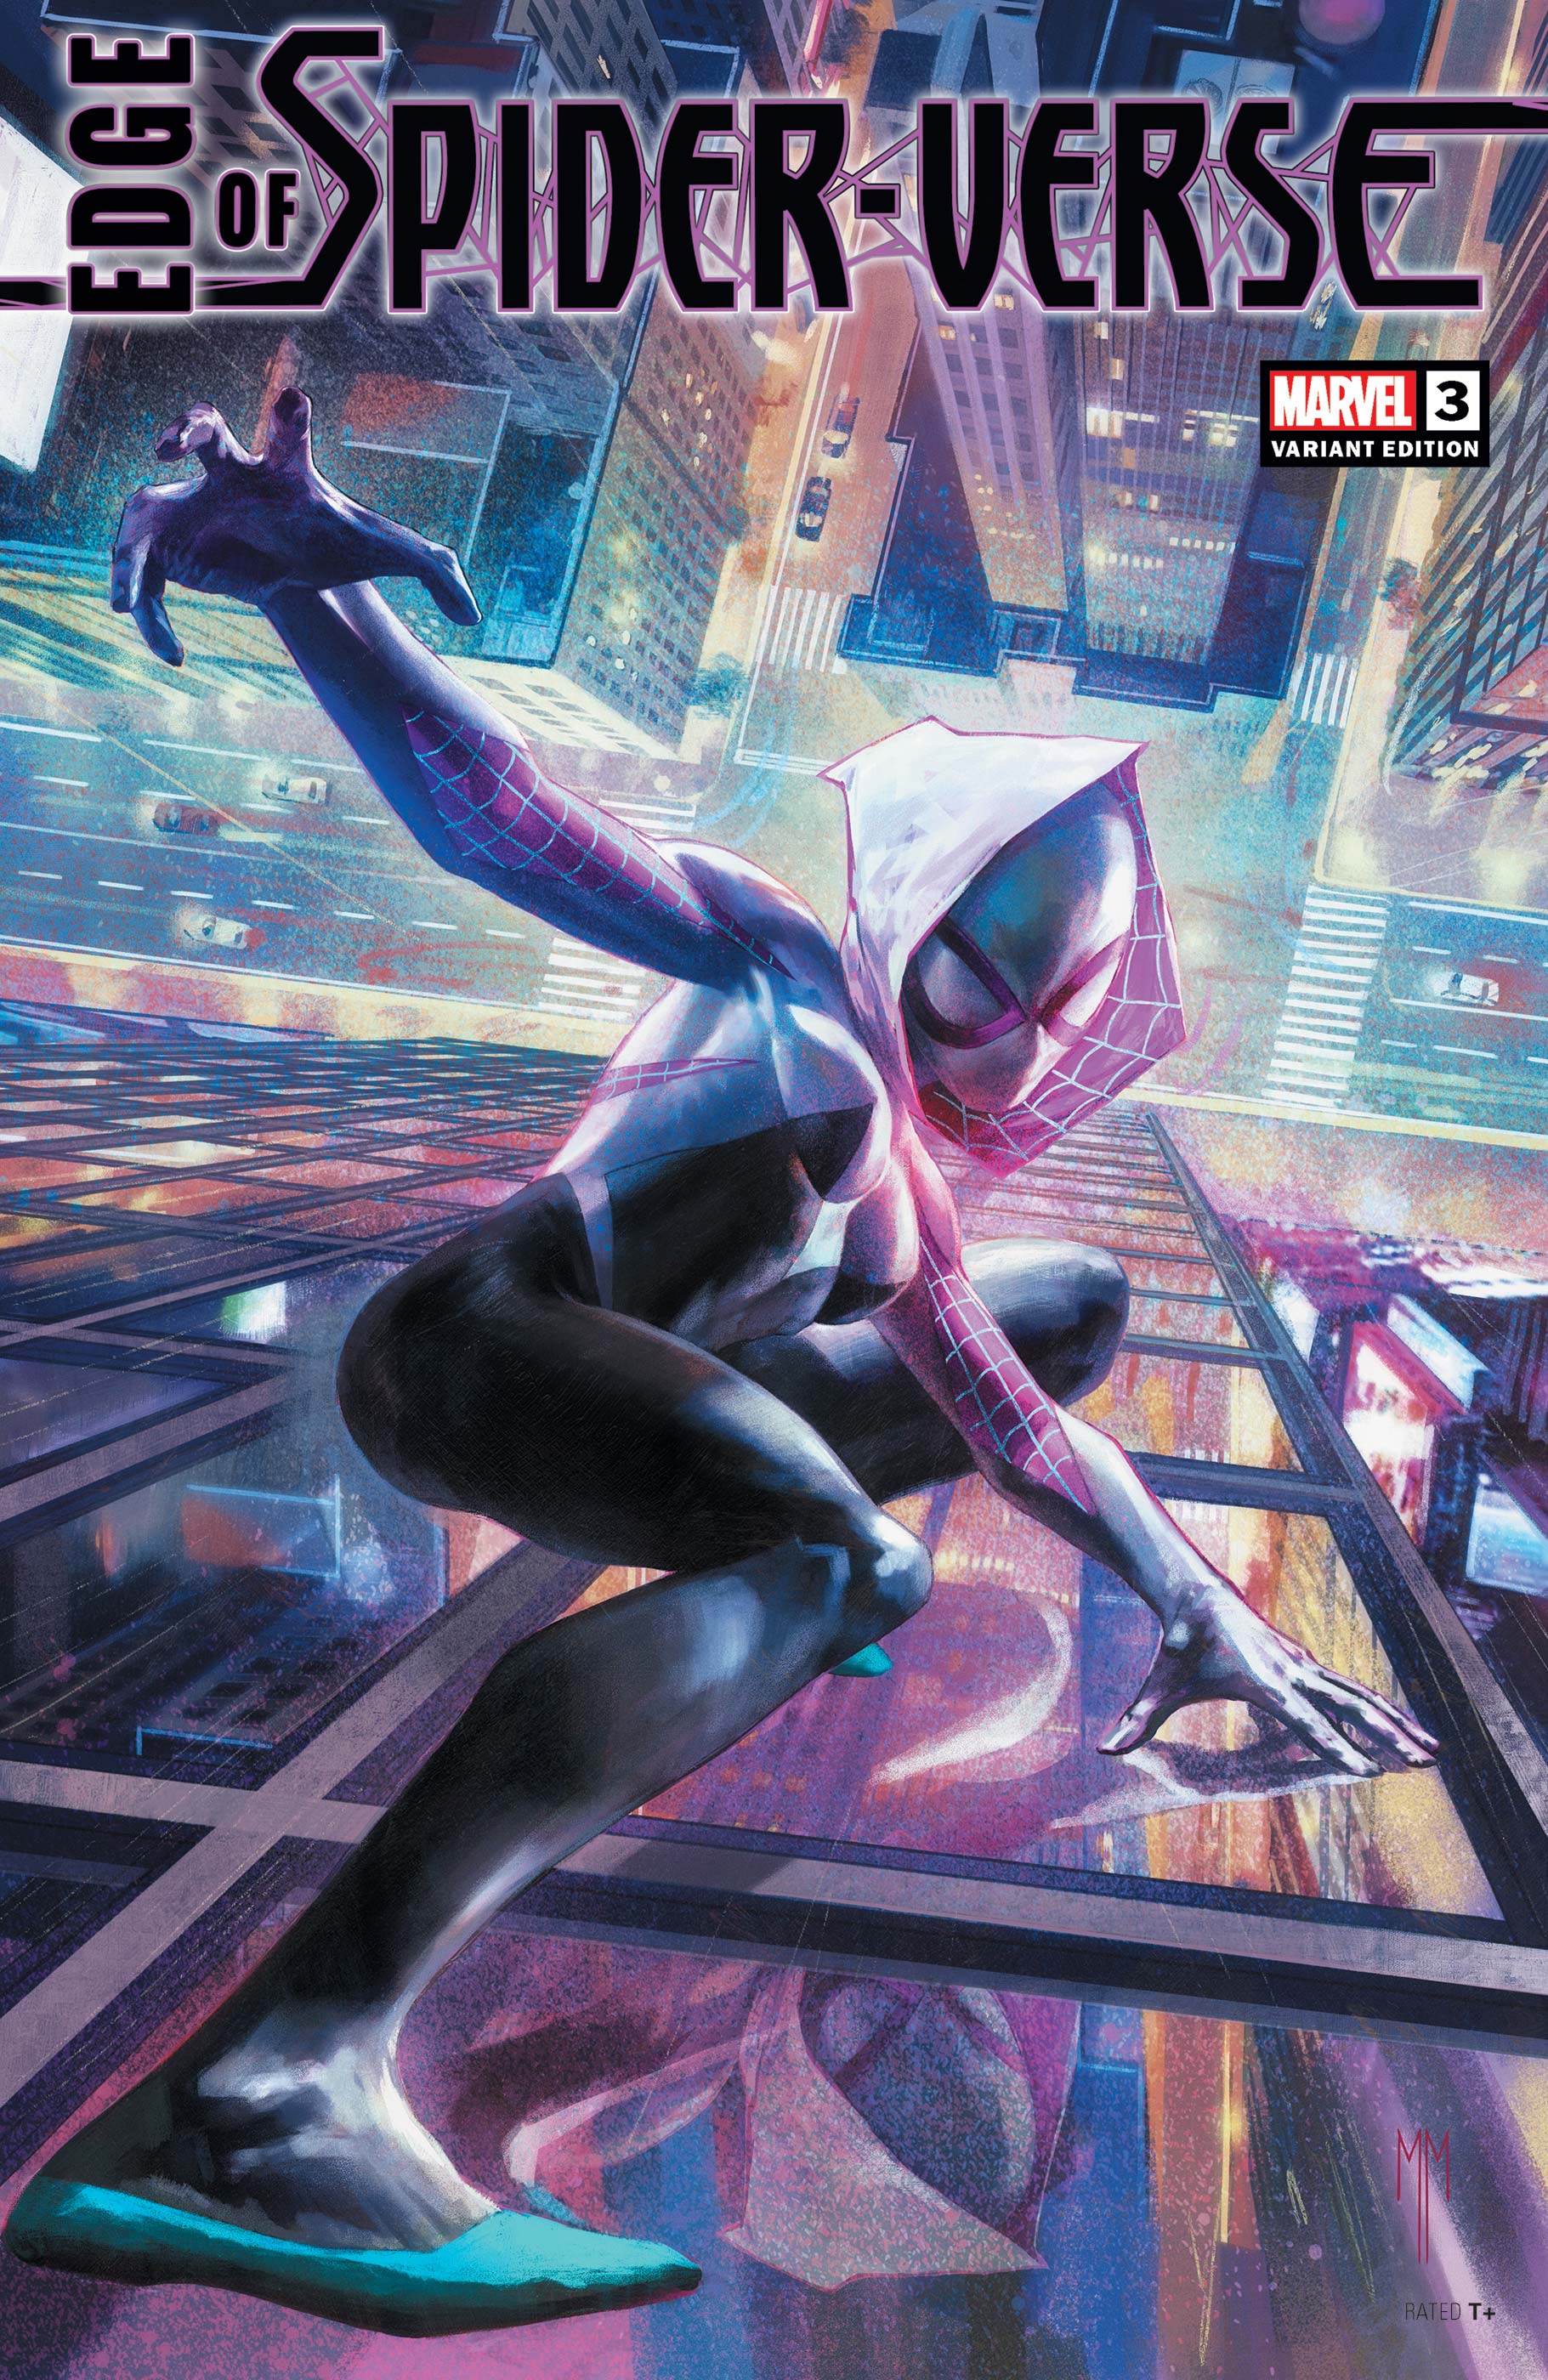 Edge of Spider-Verse Vol 4 3 | Marvel Database | Fandom